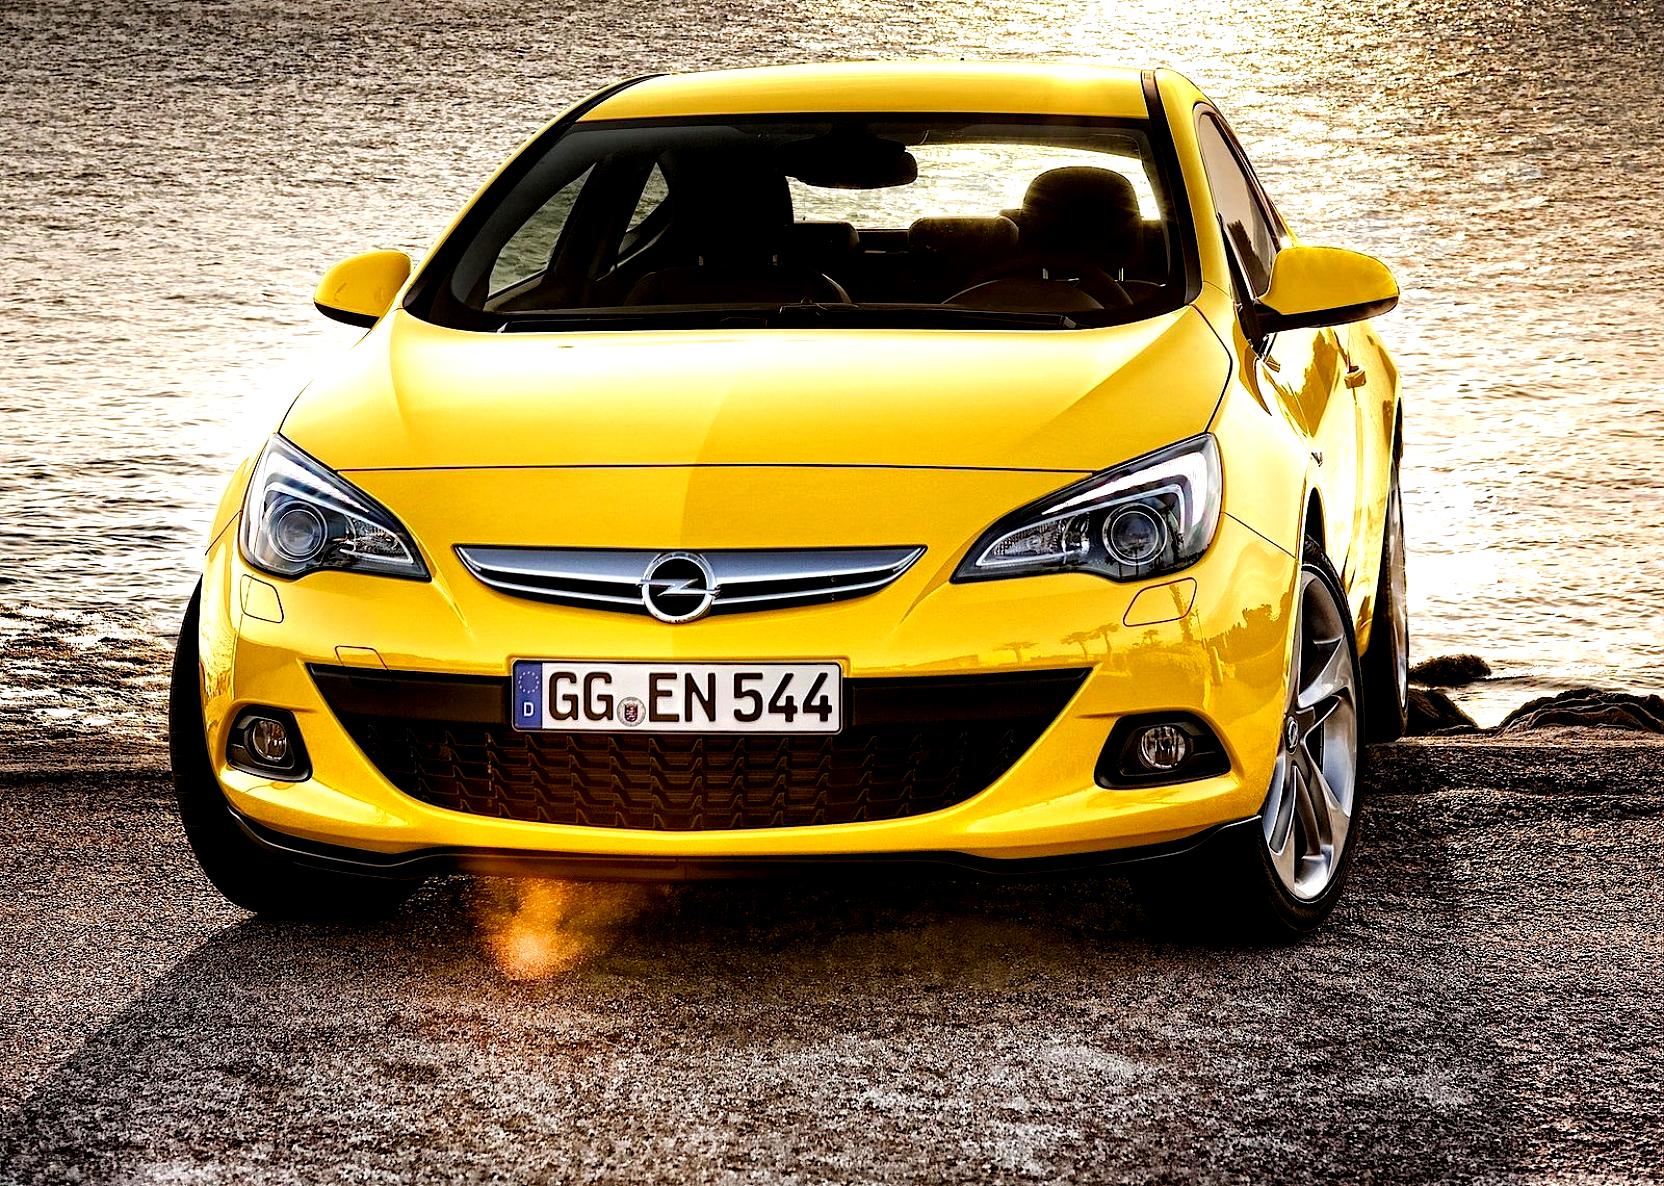 Opel Astra GTC 2011 #54